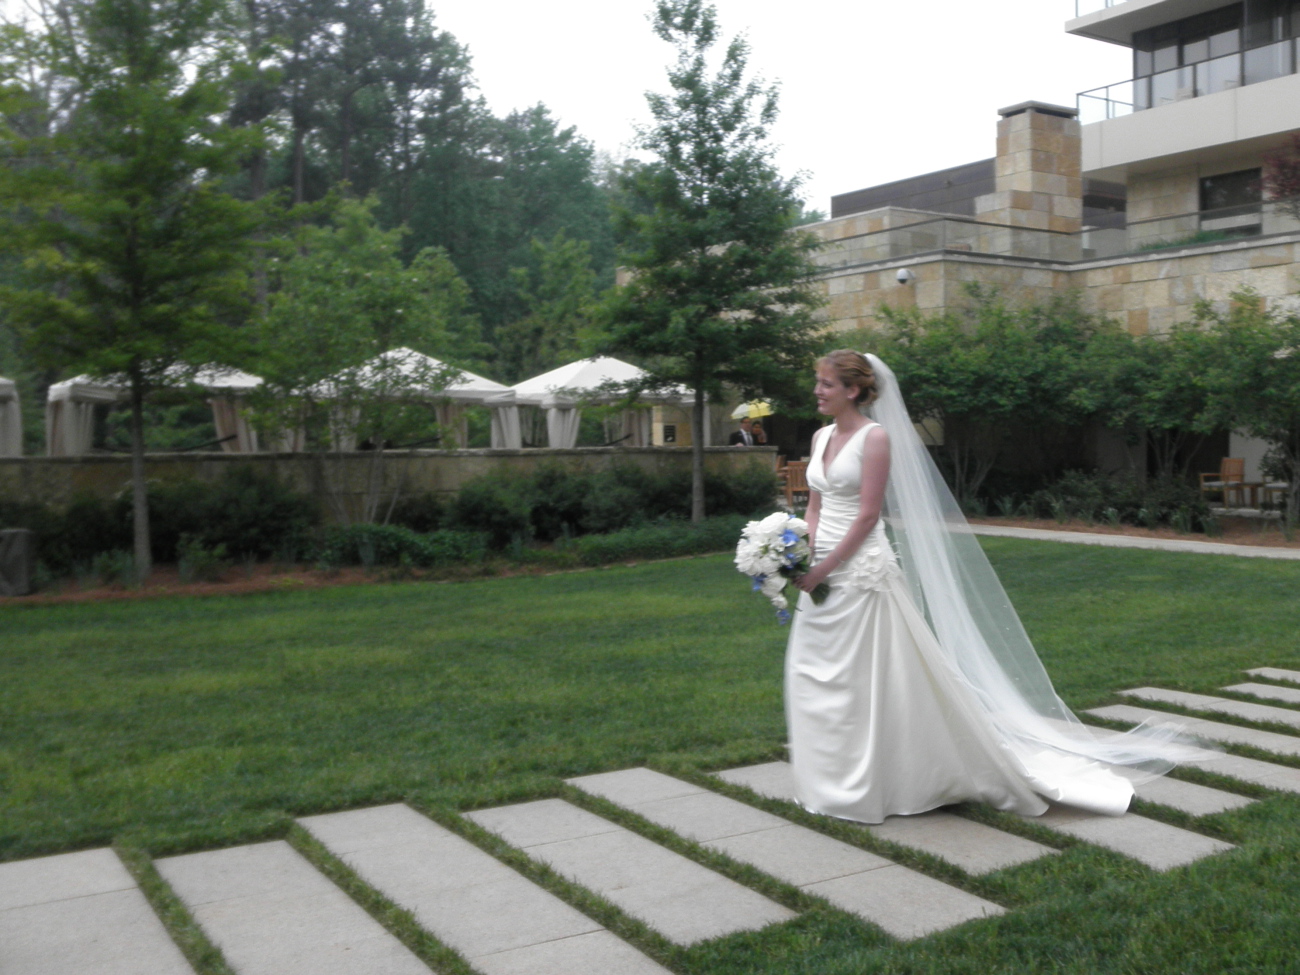 Raleigh Wedding Blog: Ten Tips for Walking Down the Aisle!